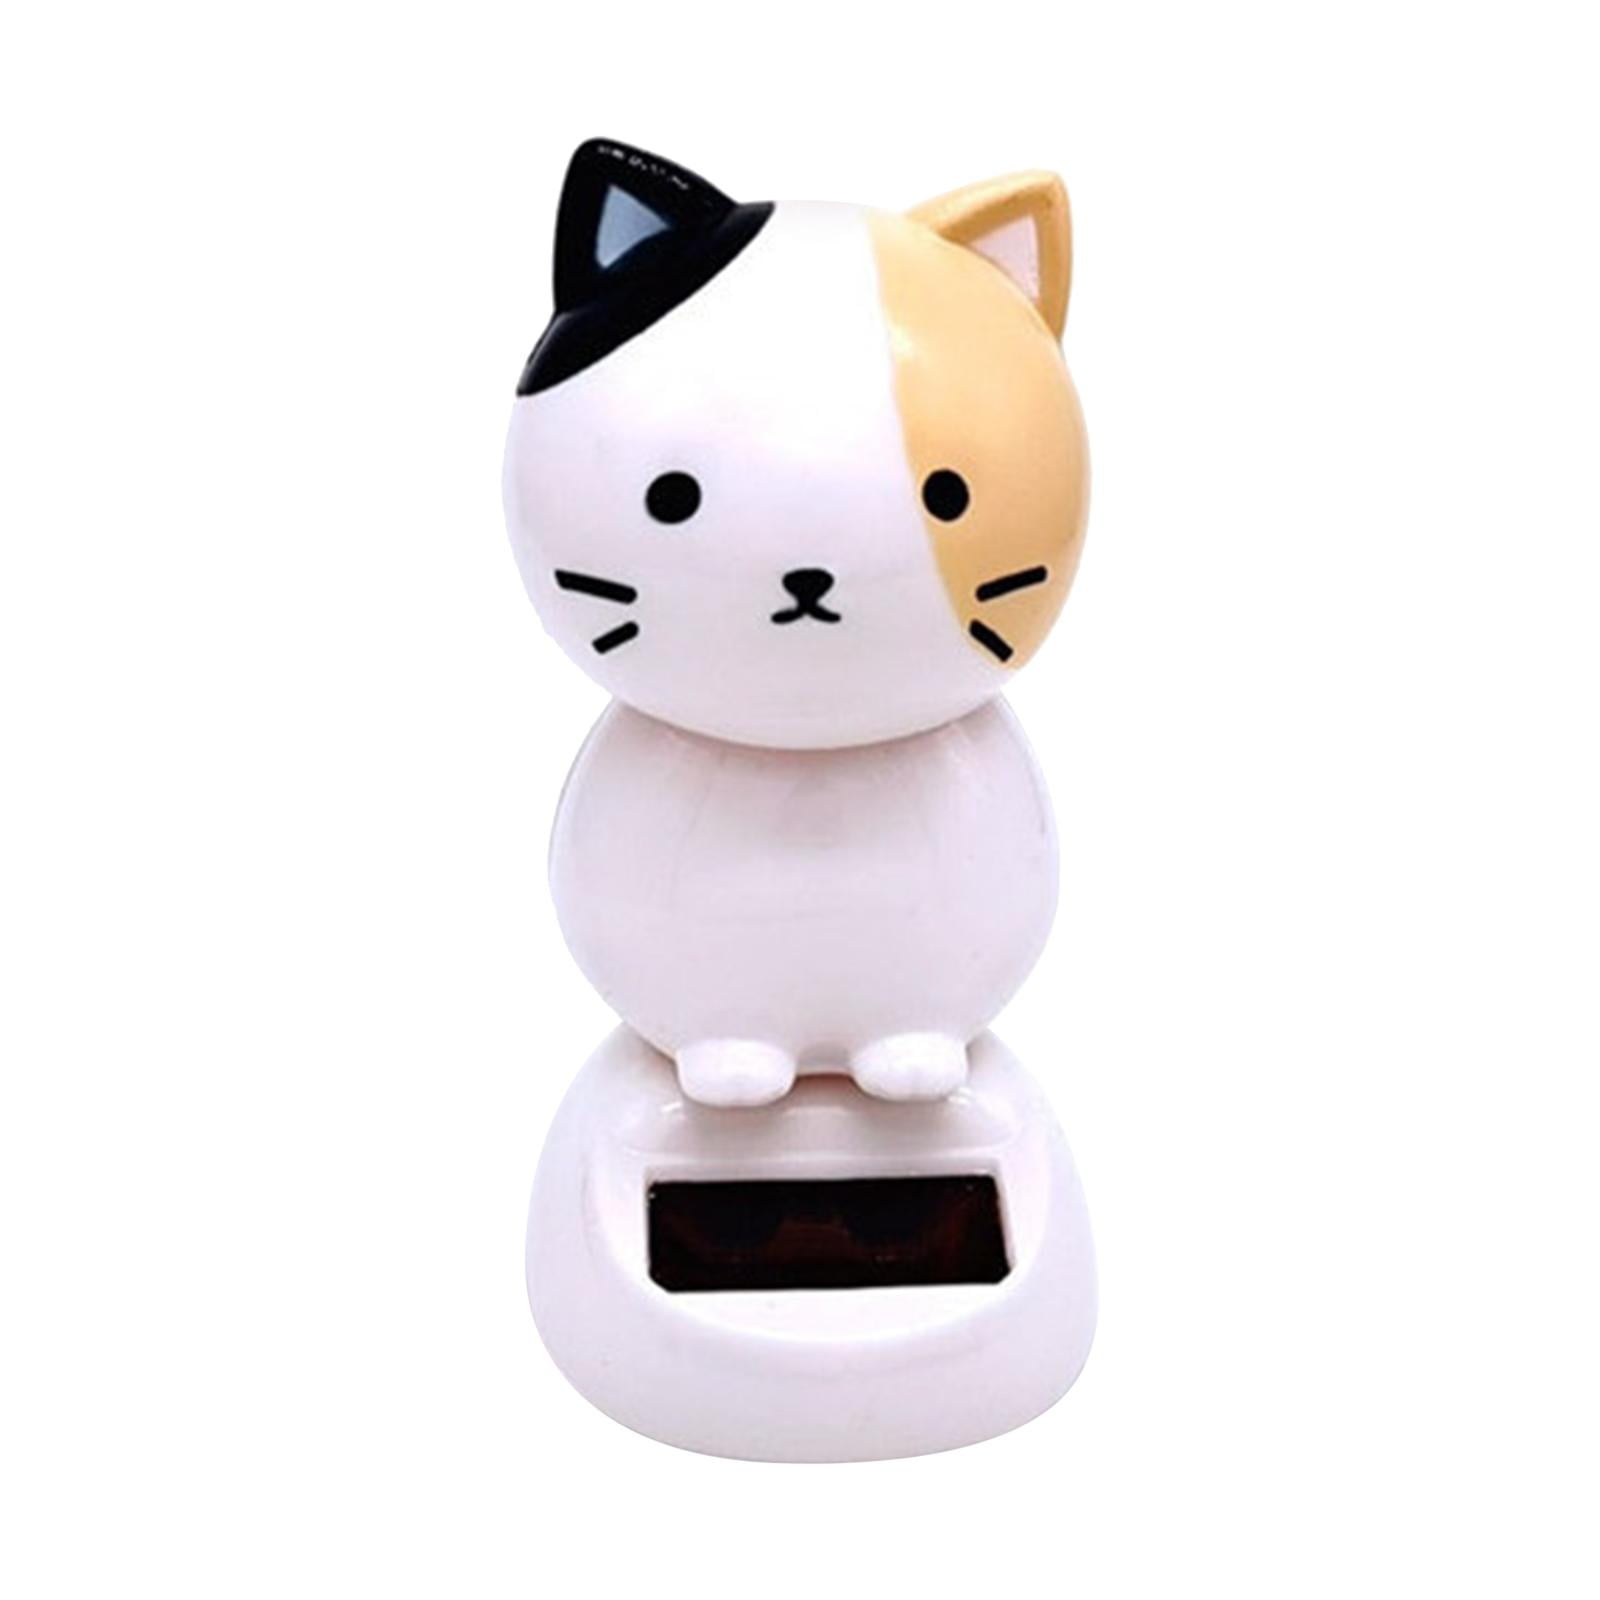 2Pcs Cartoon Bobblehead Cat in Box Doll Kids Toy Home Decor Ornament Gift 